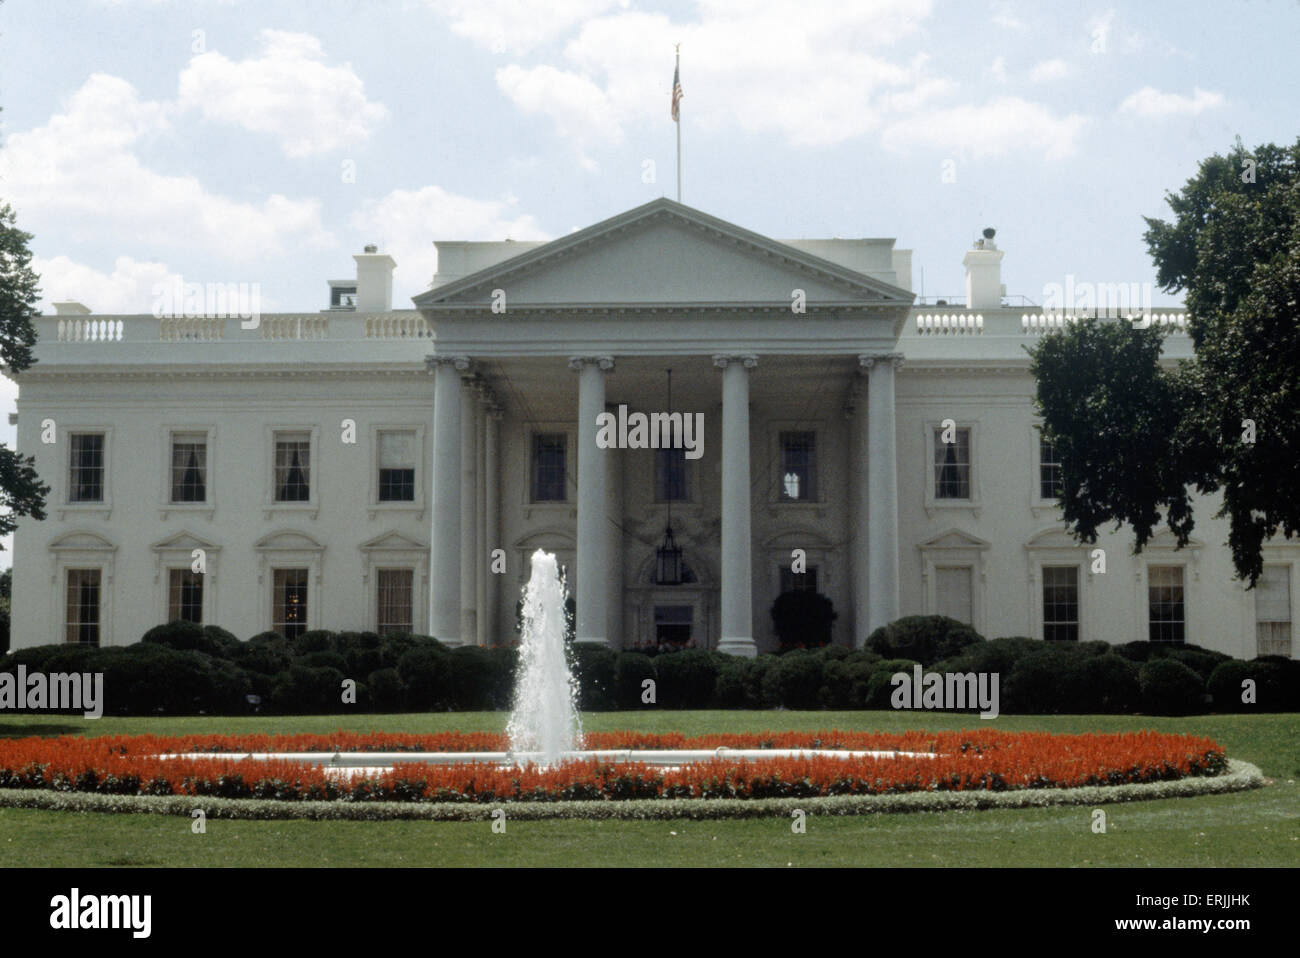 La Casa Bianca in 1600 Pennsylvania Avenue Northwest, Washington D.C. Circa 1980. Foto Stock